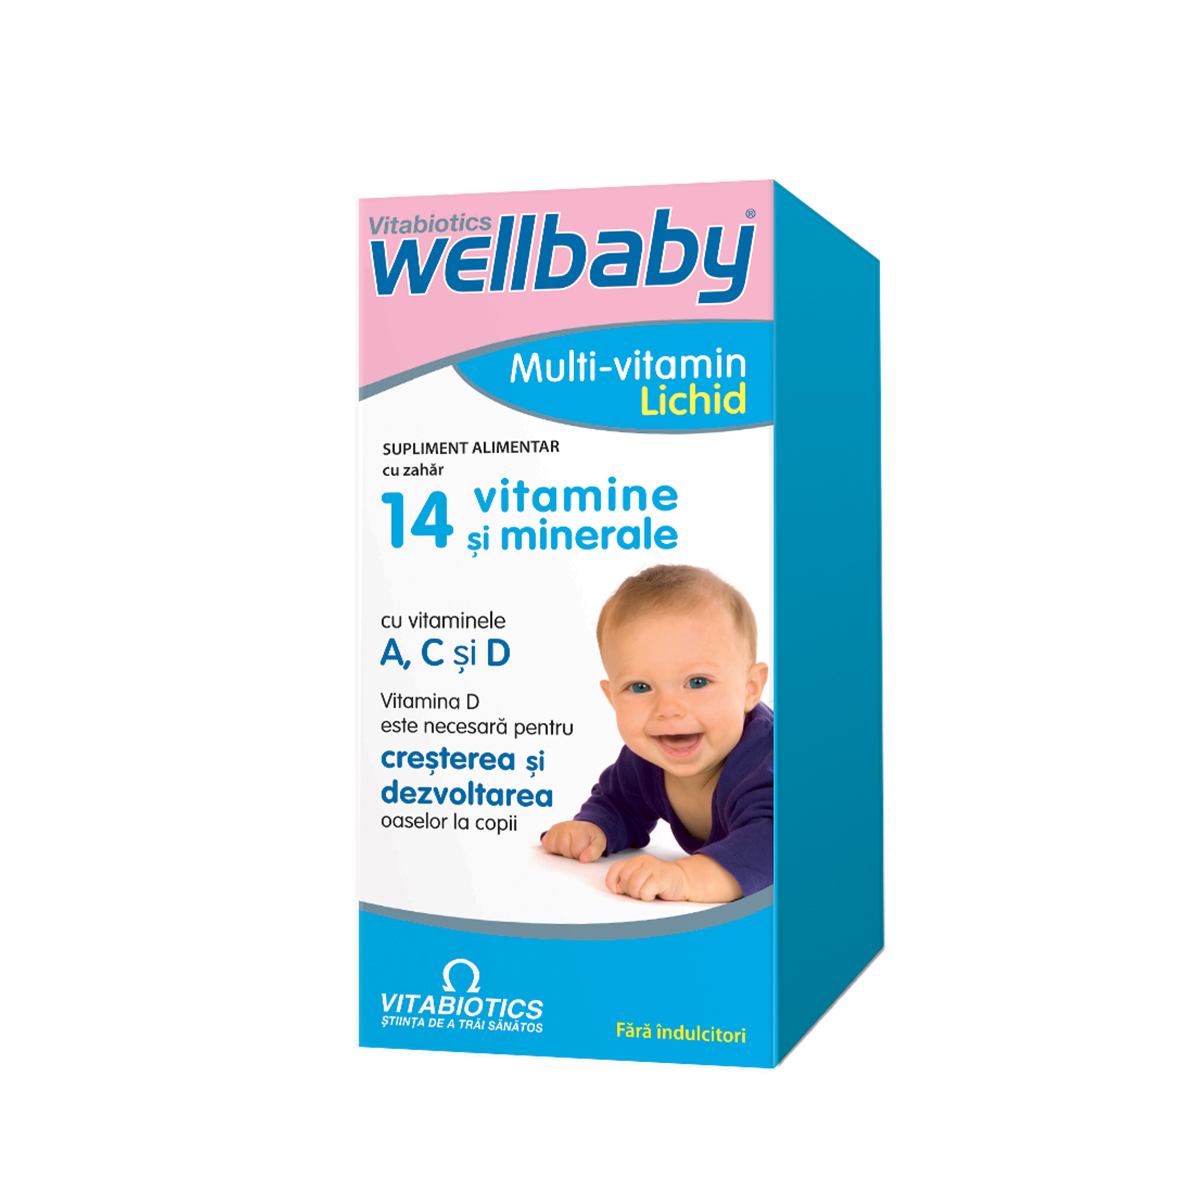 Copii - Wellbaby sirop, 150 ml, Vitabiotics, sinapis.ro